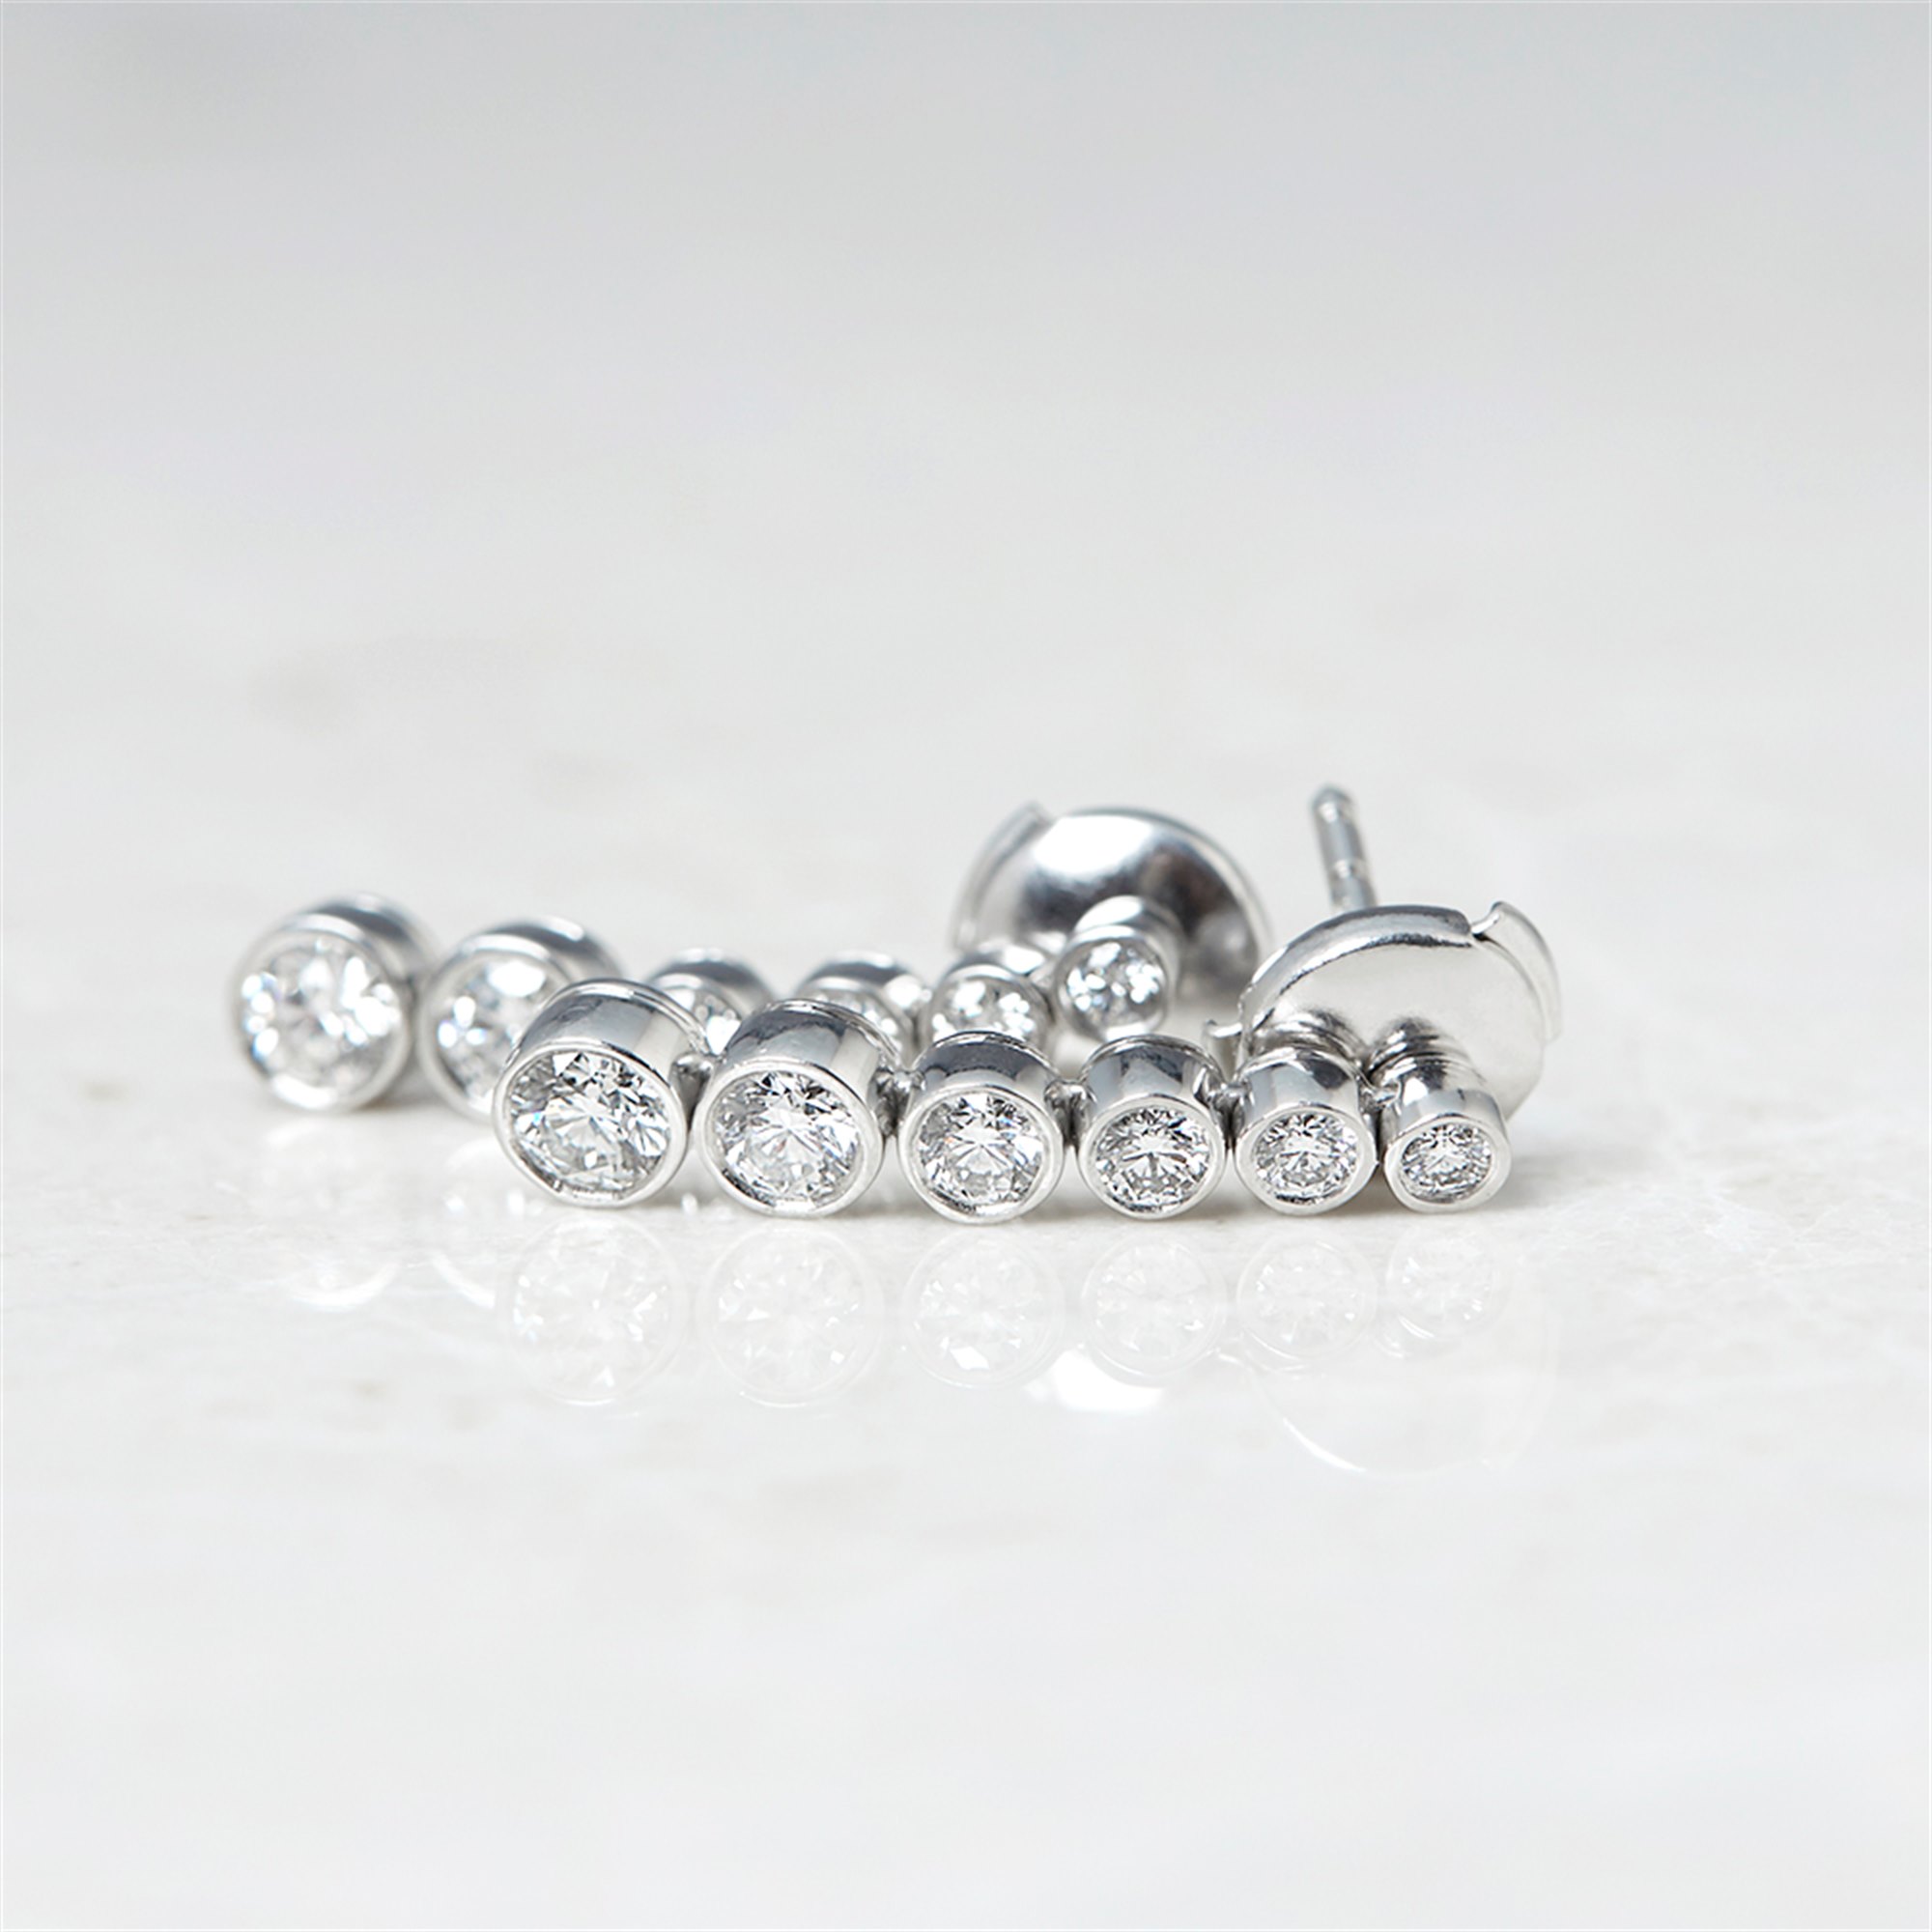 Tiffany & Co. Platinum Diamond Drop Jazz Earrings